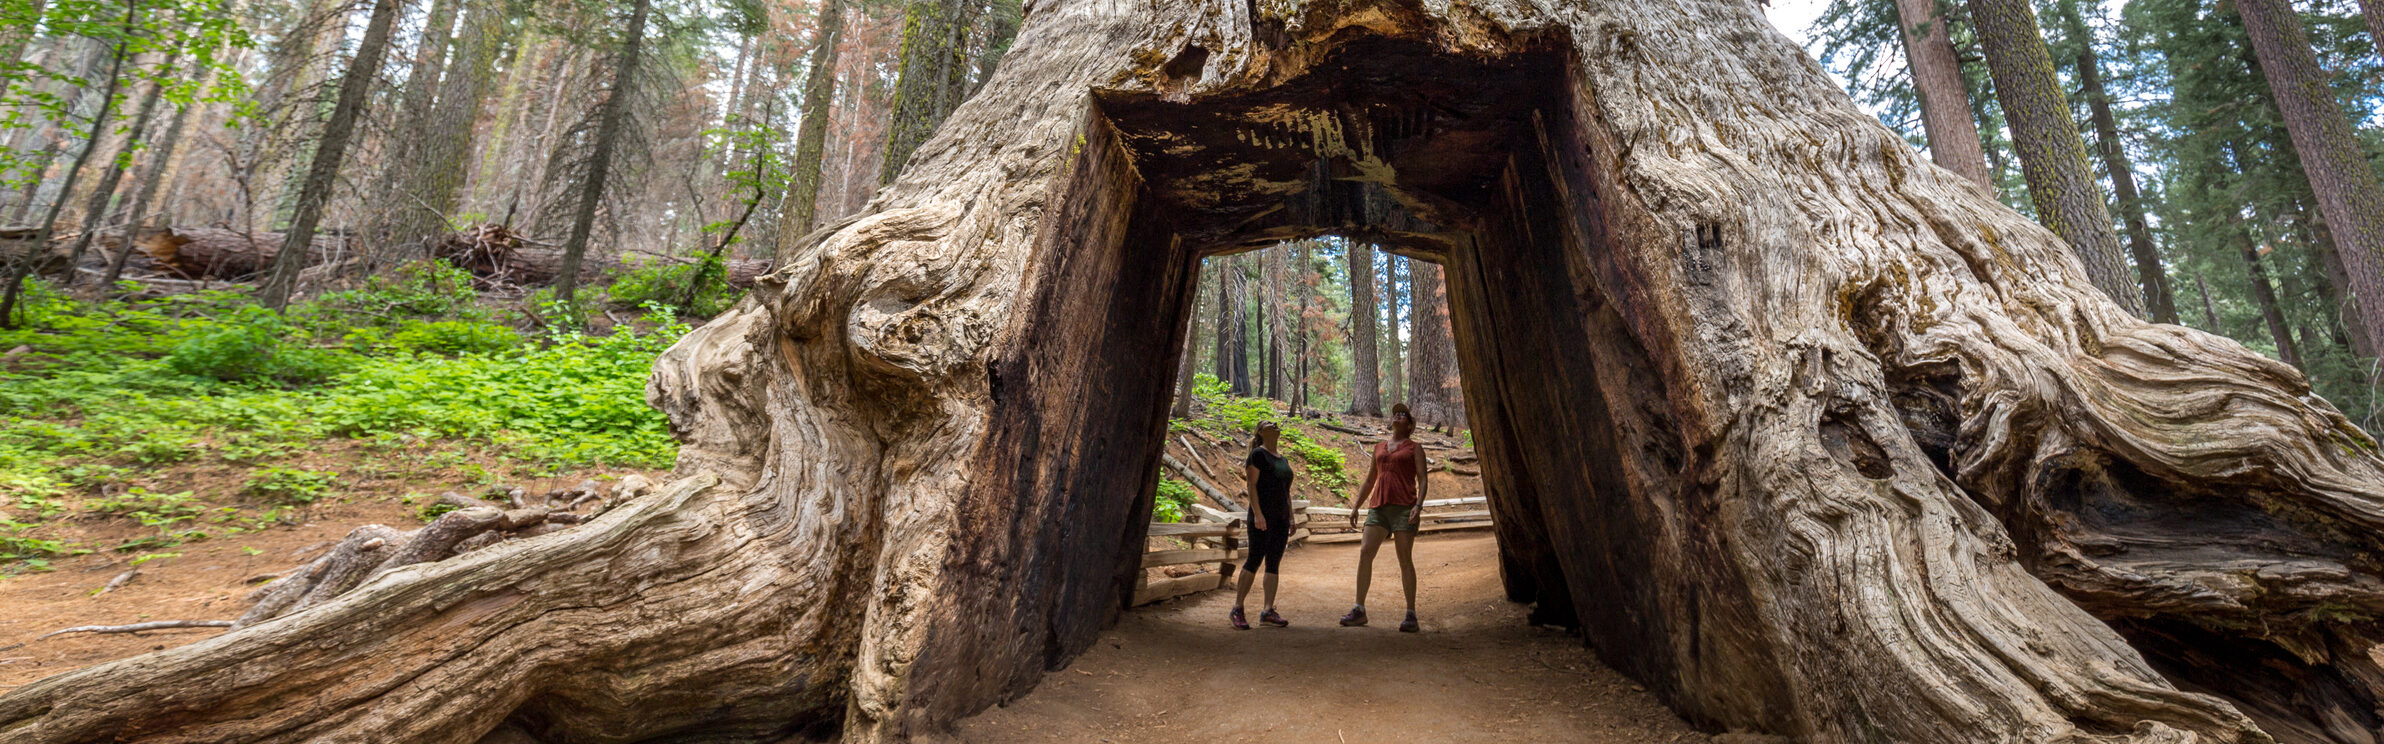 Wonders of Yosemite Hike & Tour